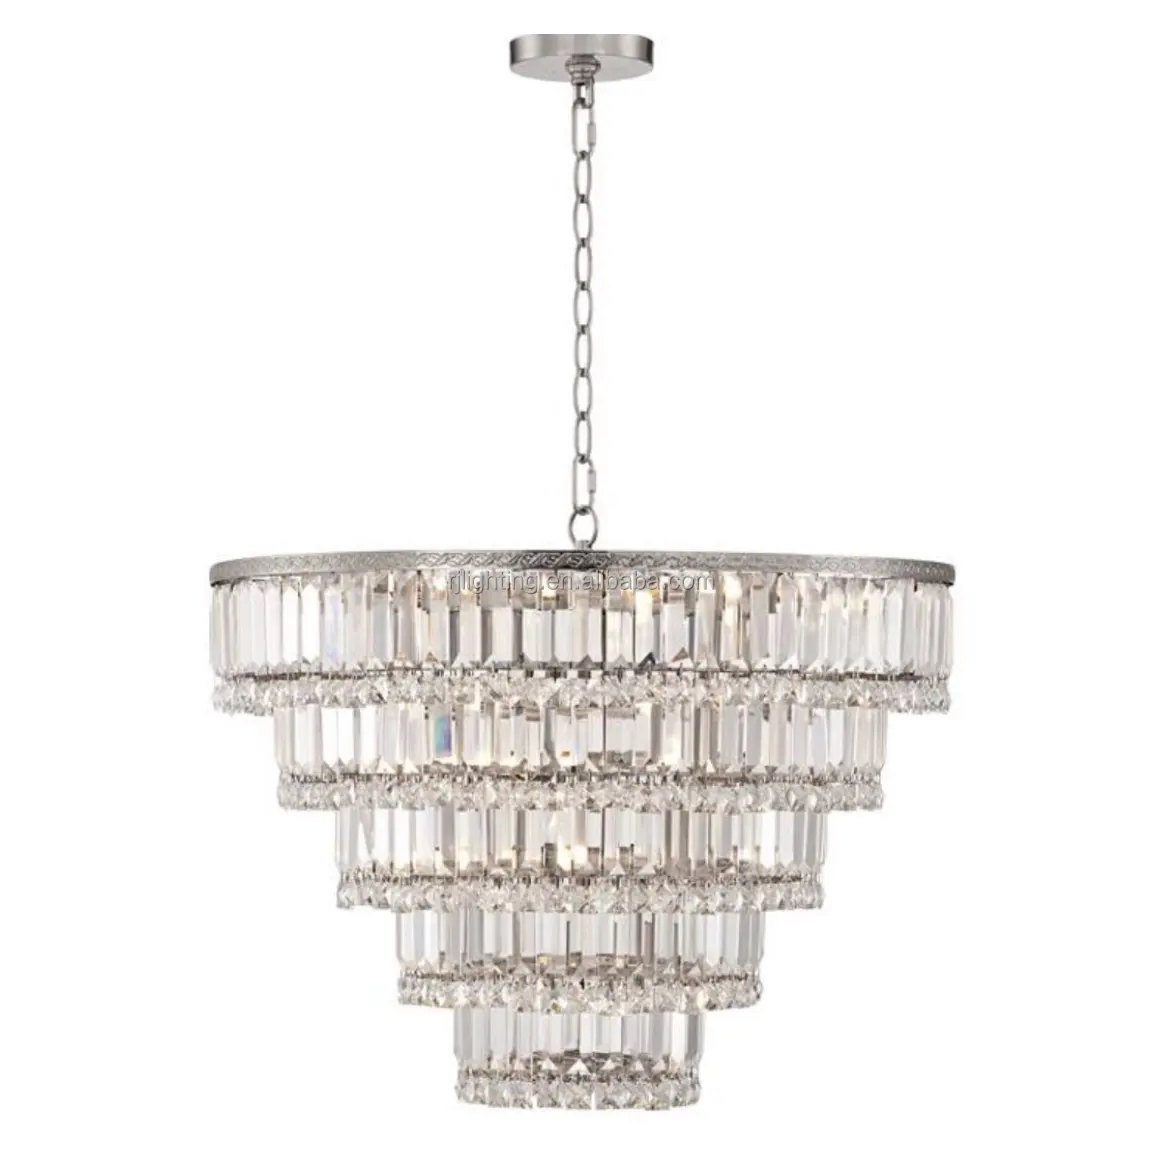 house lights modern indoor ceiling round led pendant light luxury silver nickel crystal chandelier